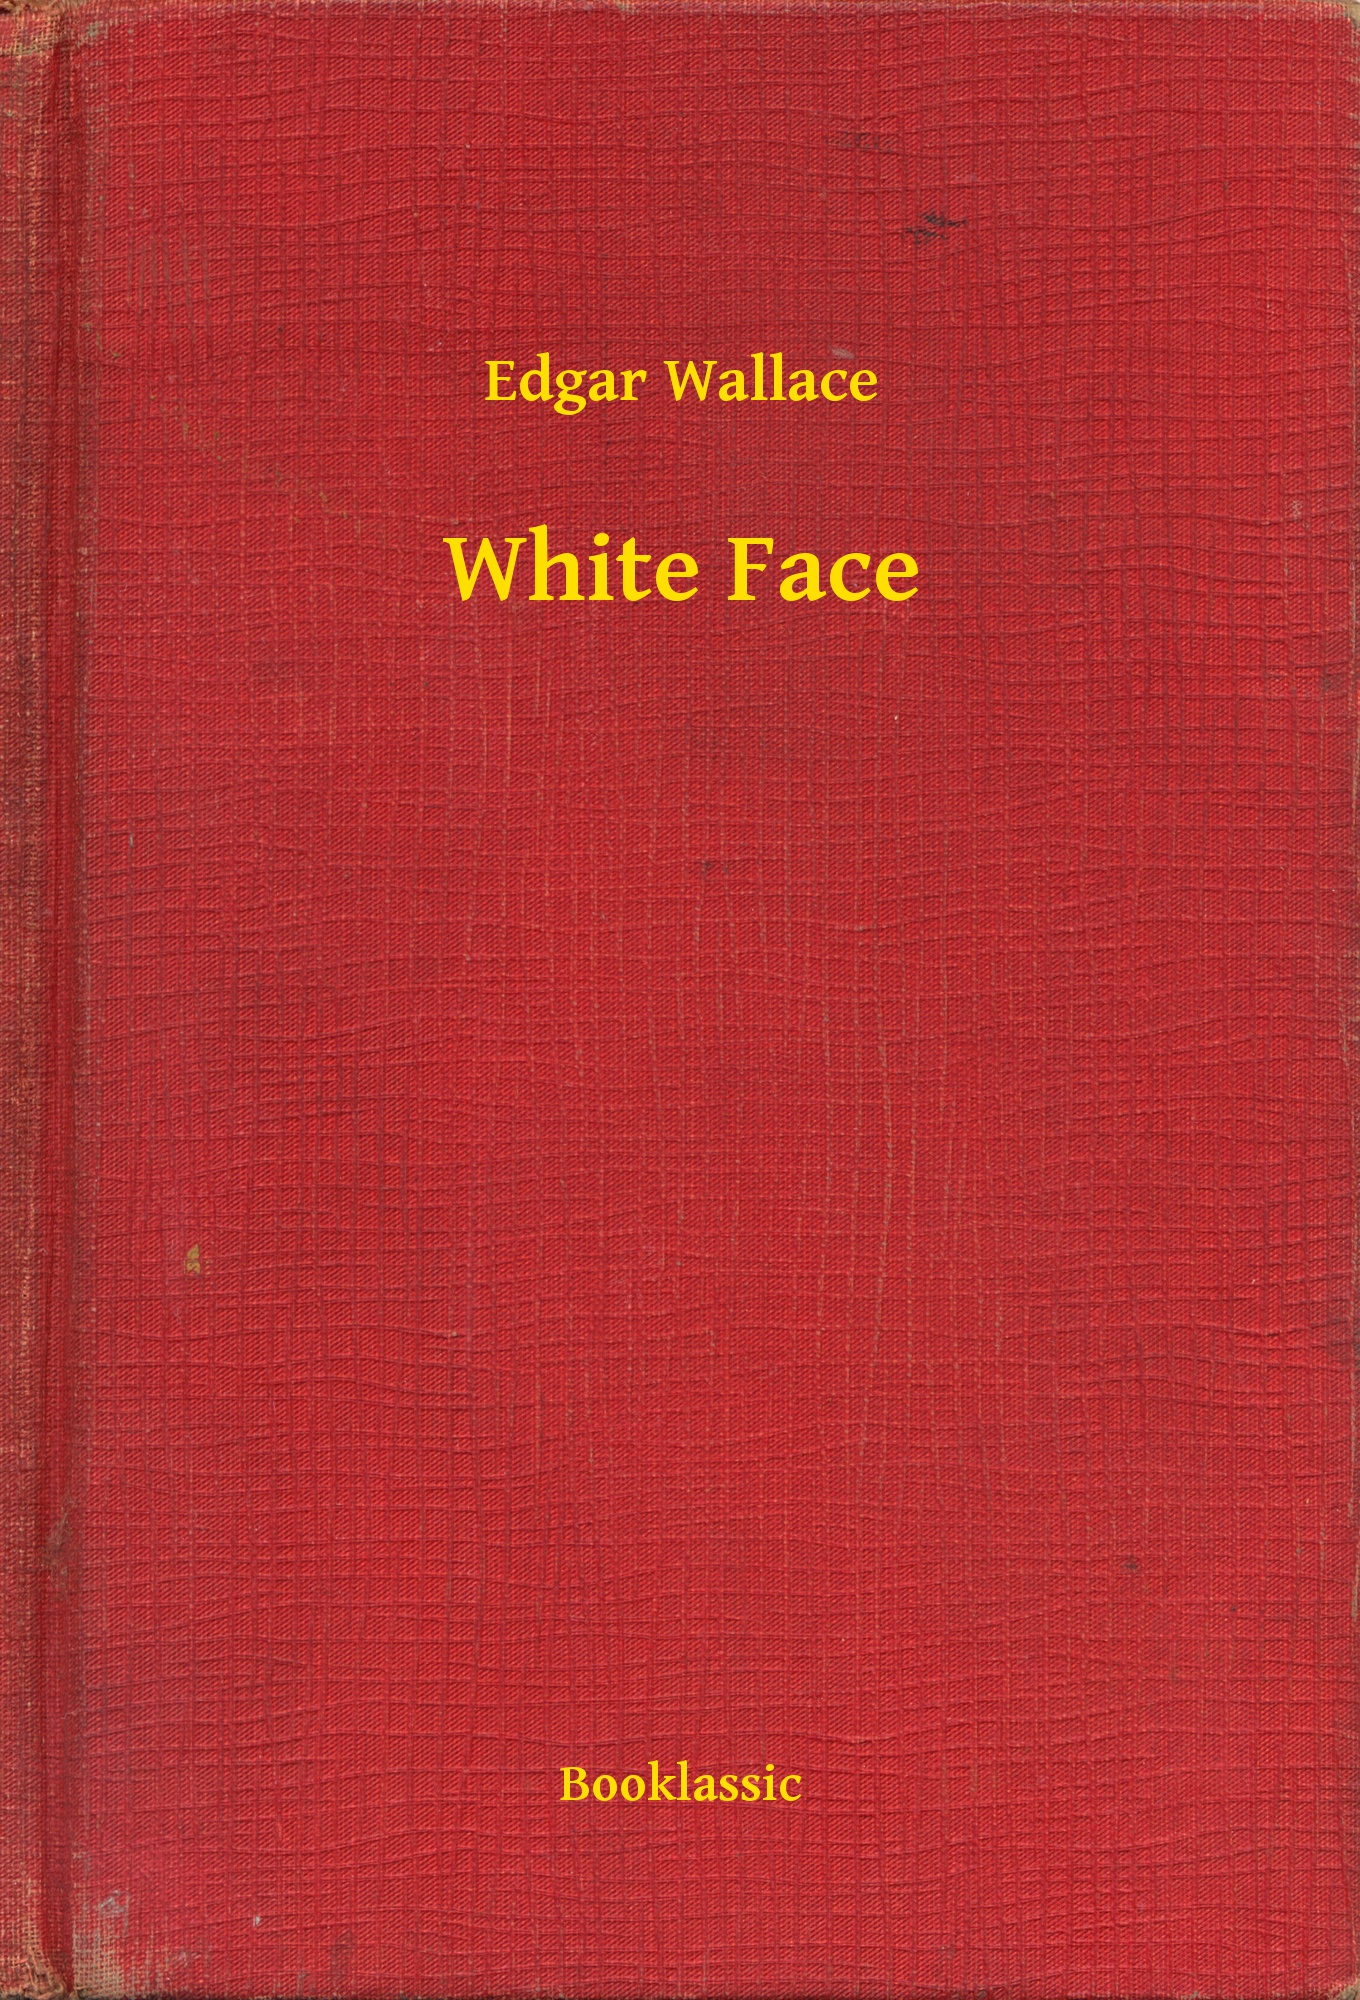 White Face